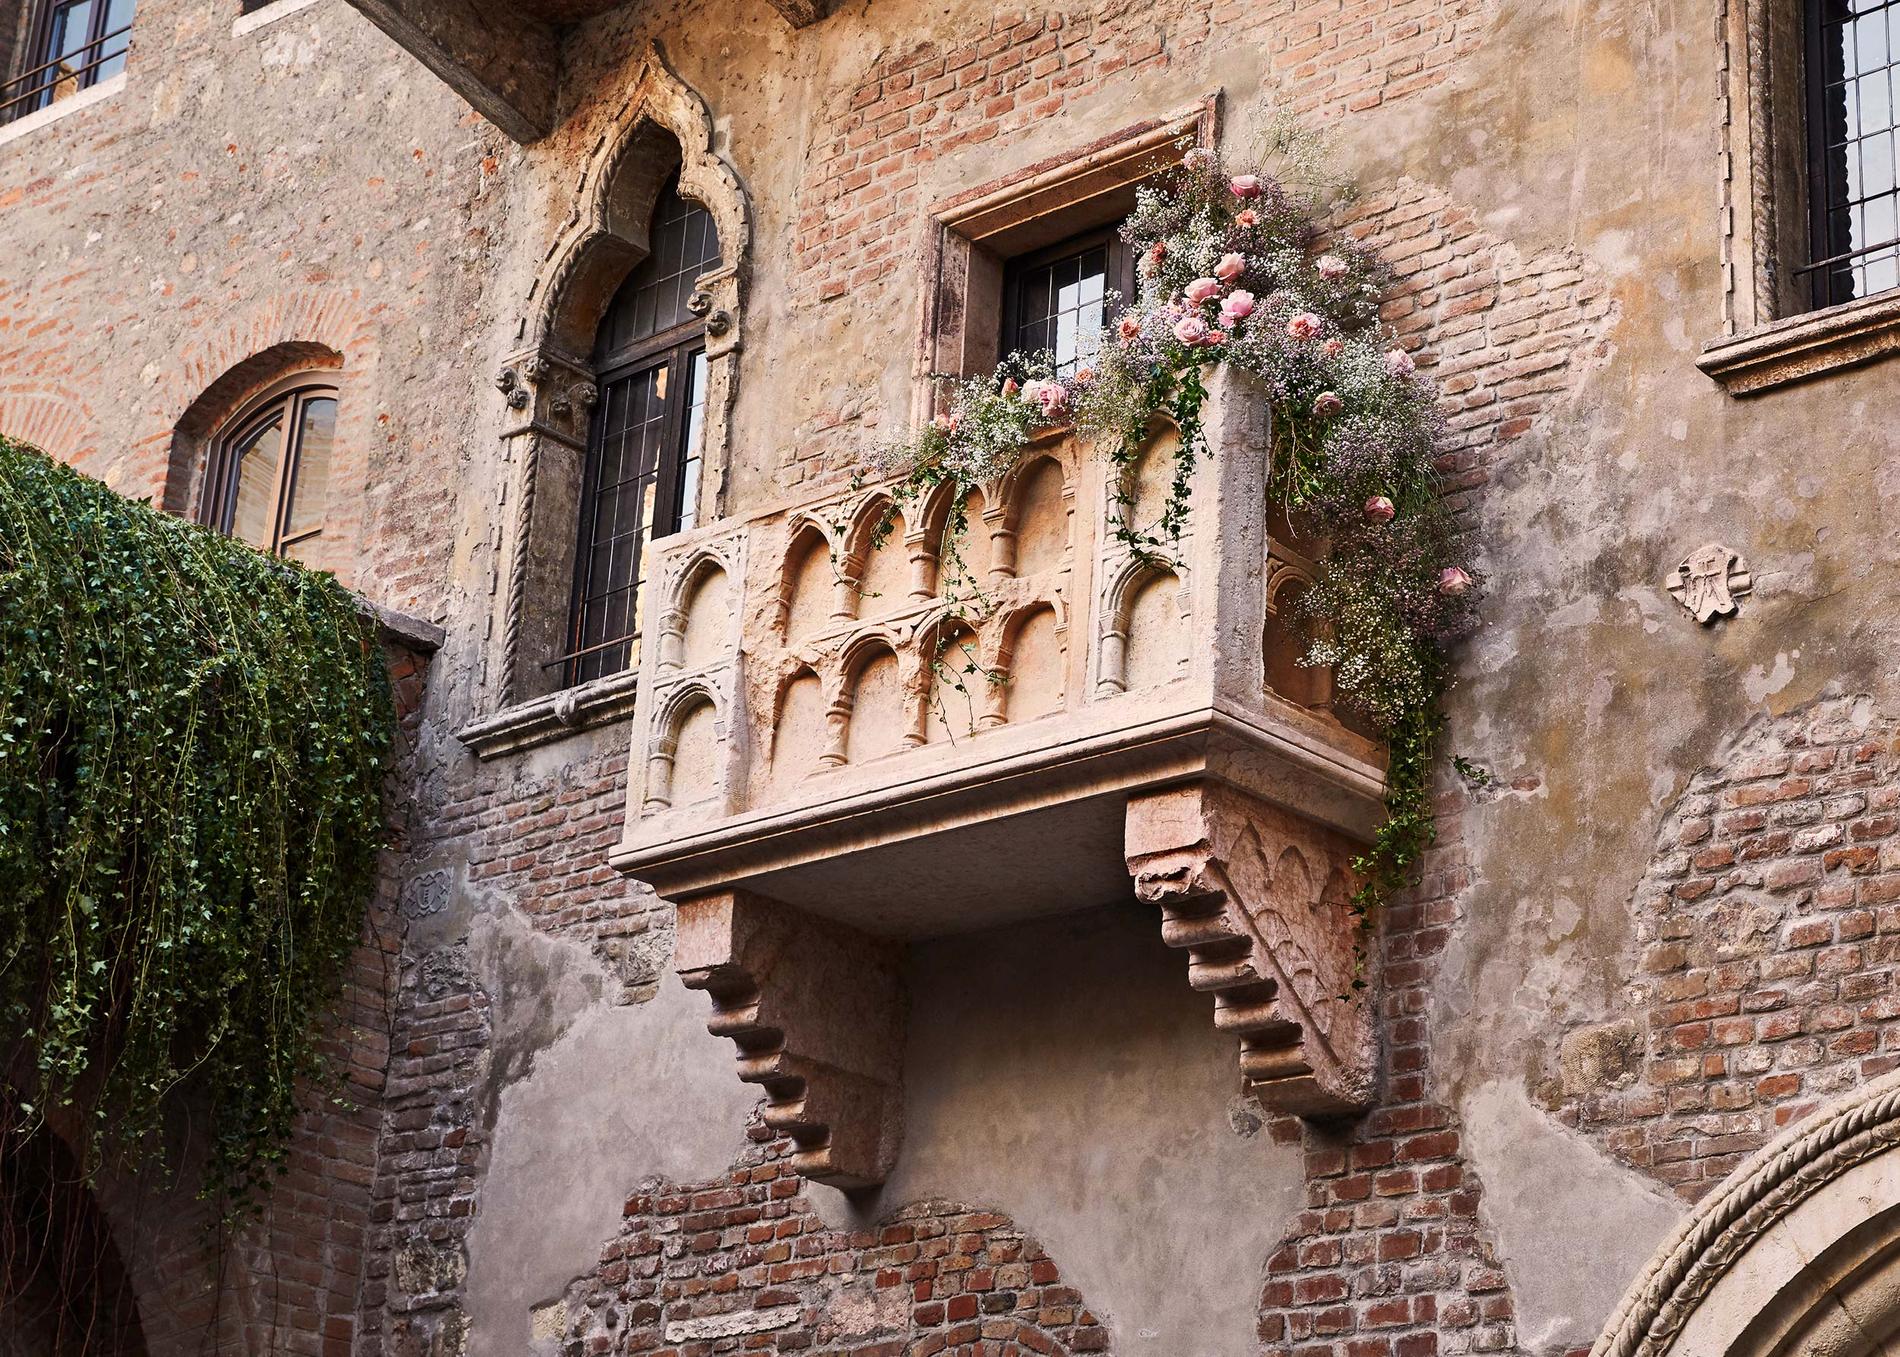 ”O Romeo, Romeo, Wherefore art thou Romeo?" sade Julia från en balkong i sagan. 